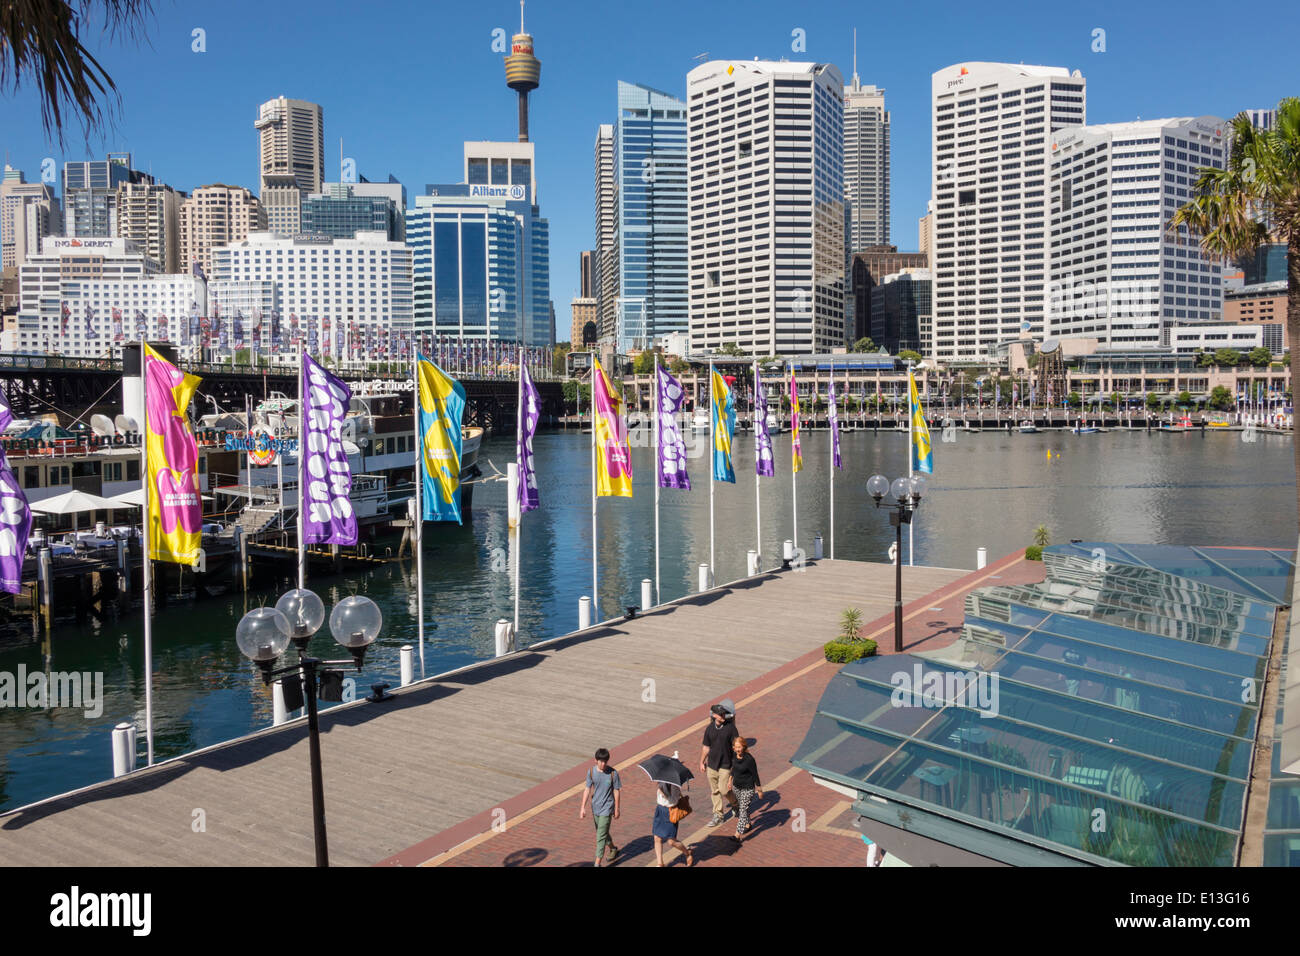 Sydney Australia,Darling Harbour,harbor,Cockle Bay Promenade,water,Sydney Tower,skyscrapers,city skyline,AU140311062 Stock Photo